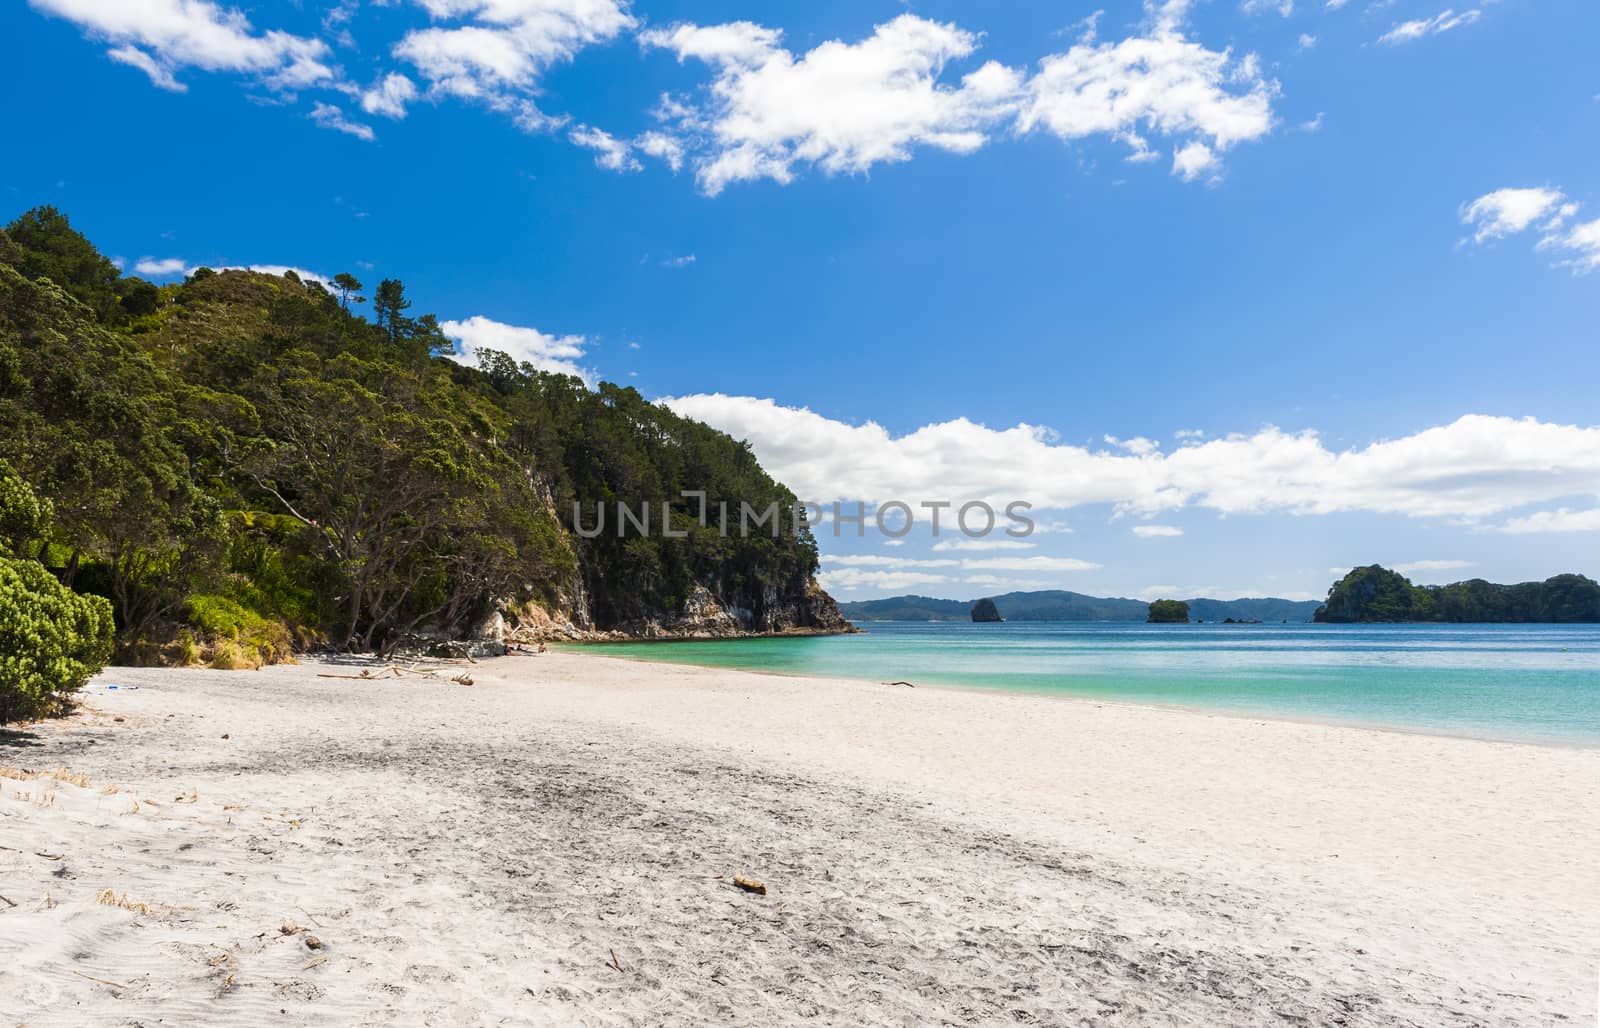 Hahei Beach at Coromandel Peninsula on New Zealand by fyletto